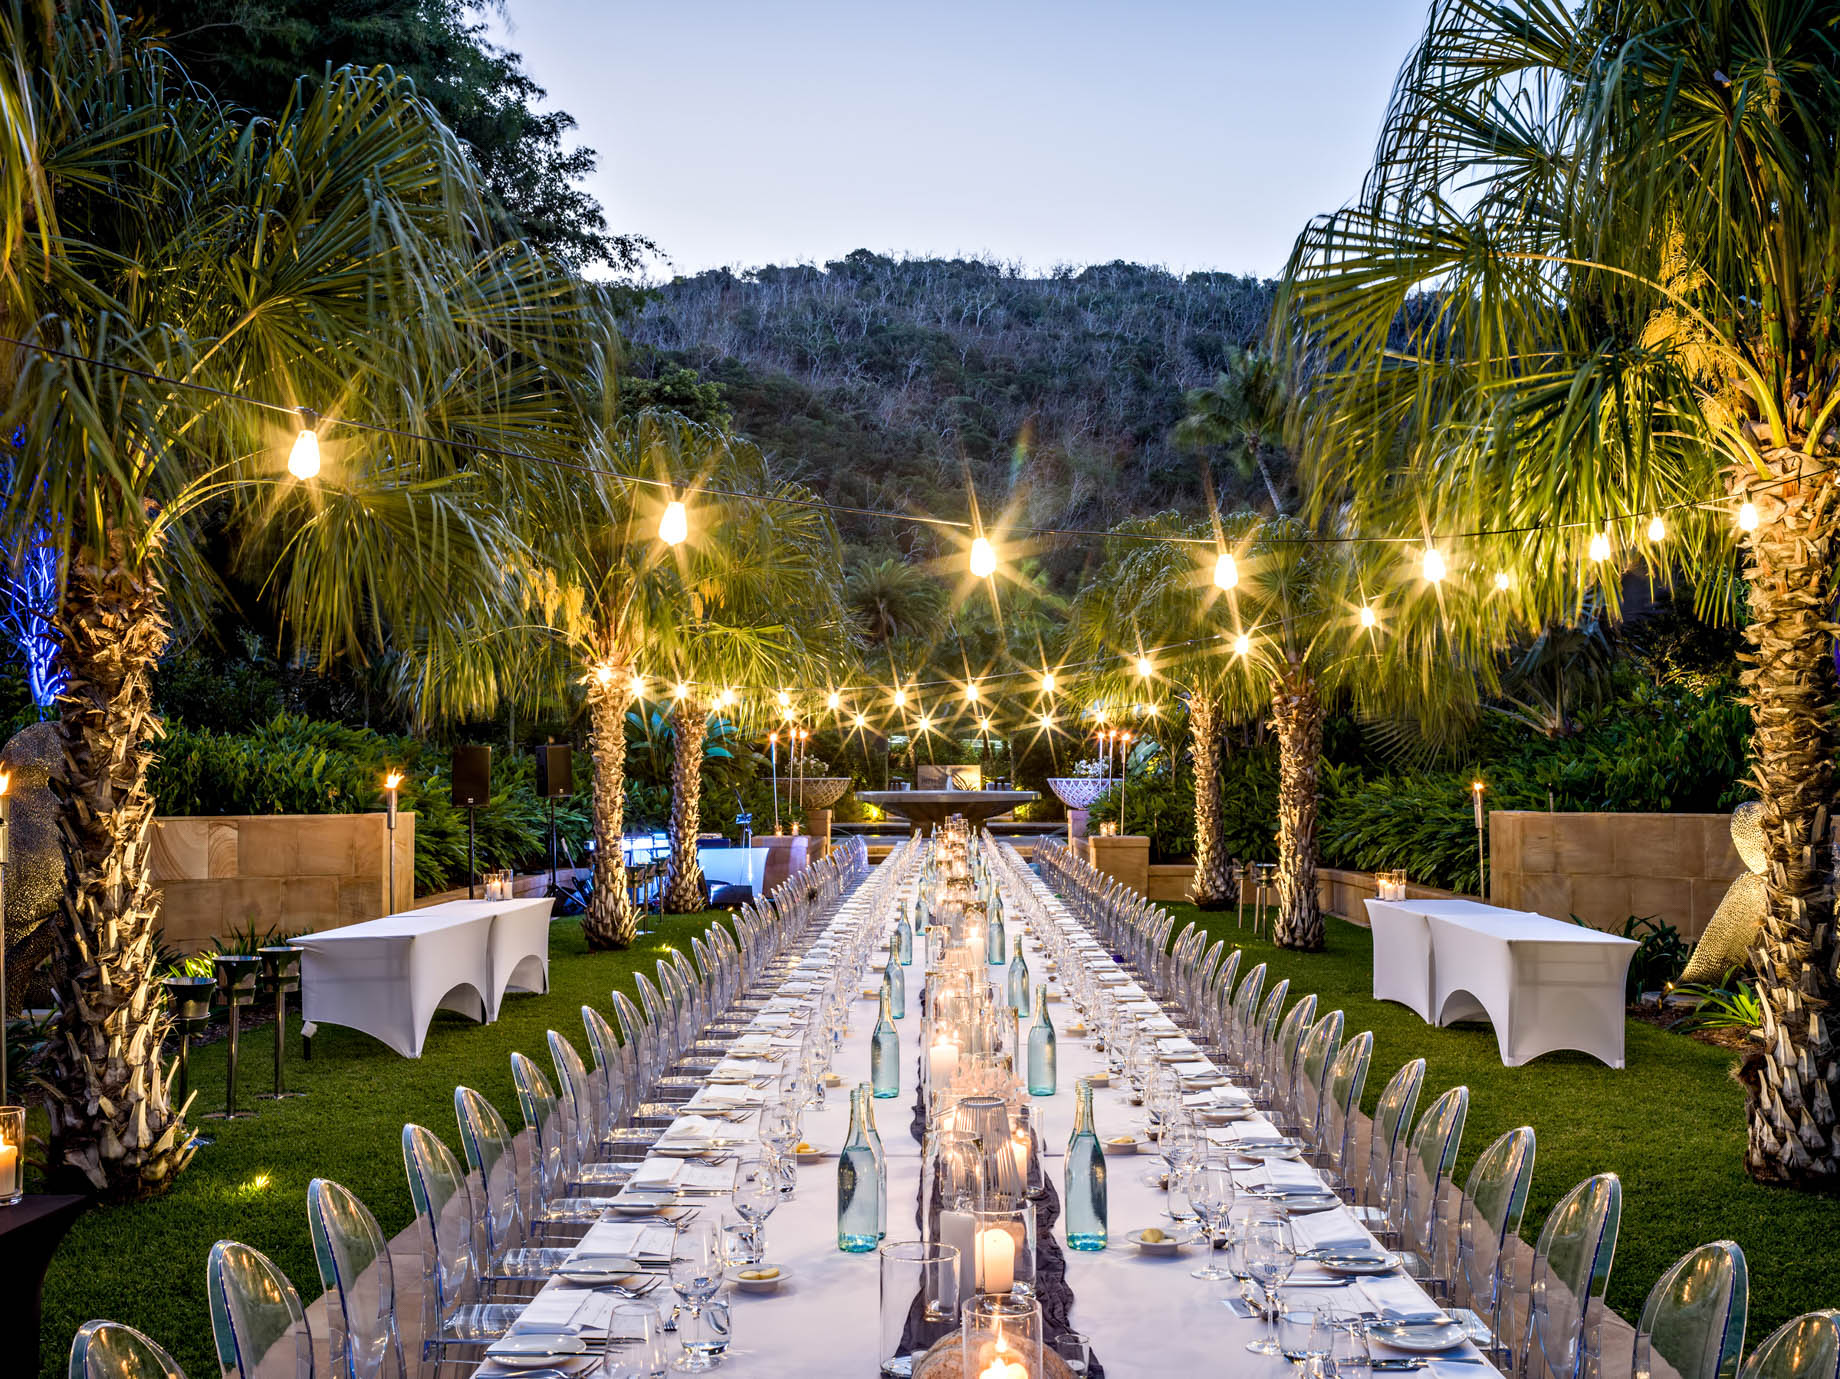 InterContinental Hayman Island Resort – Whitsunday Islands, Australia – Formal Garden Banquet